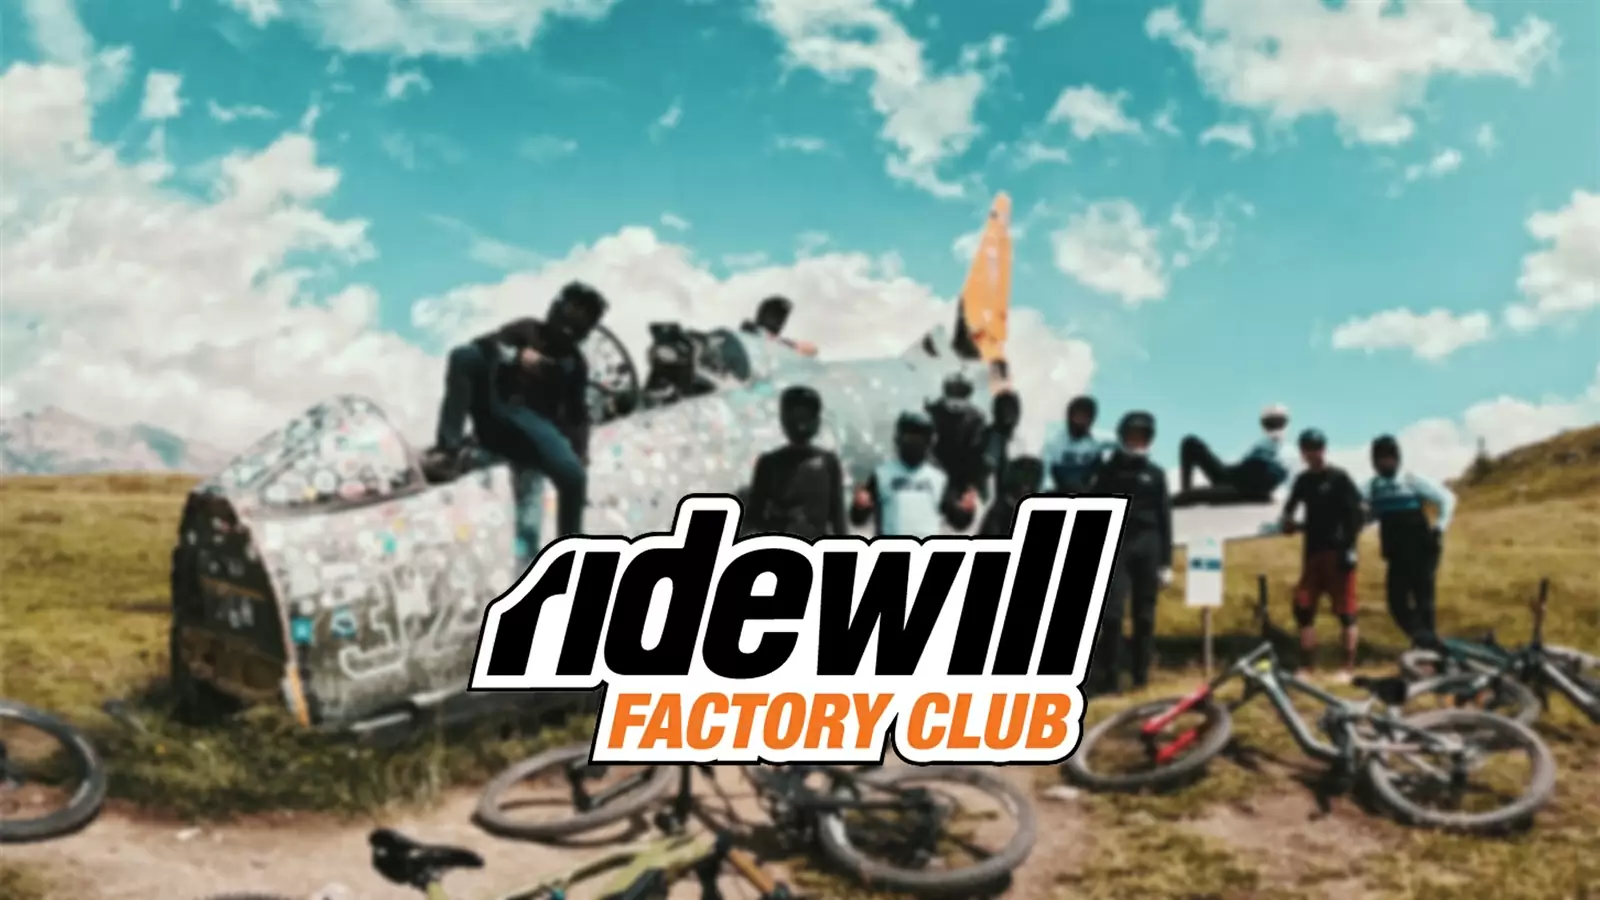 Ridewill Factory Club - image